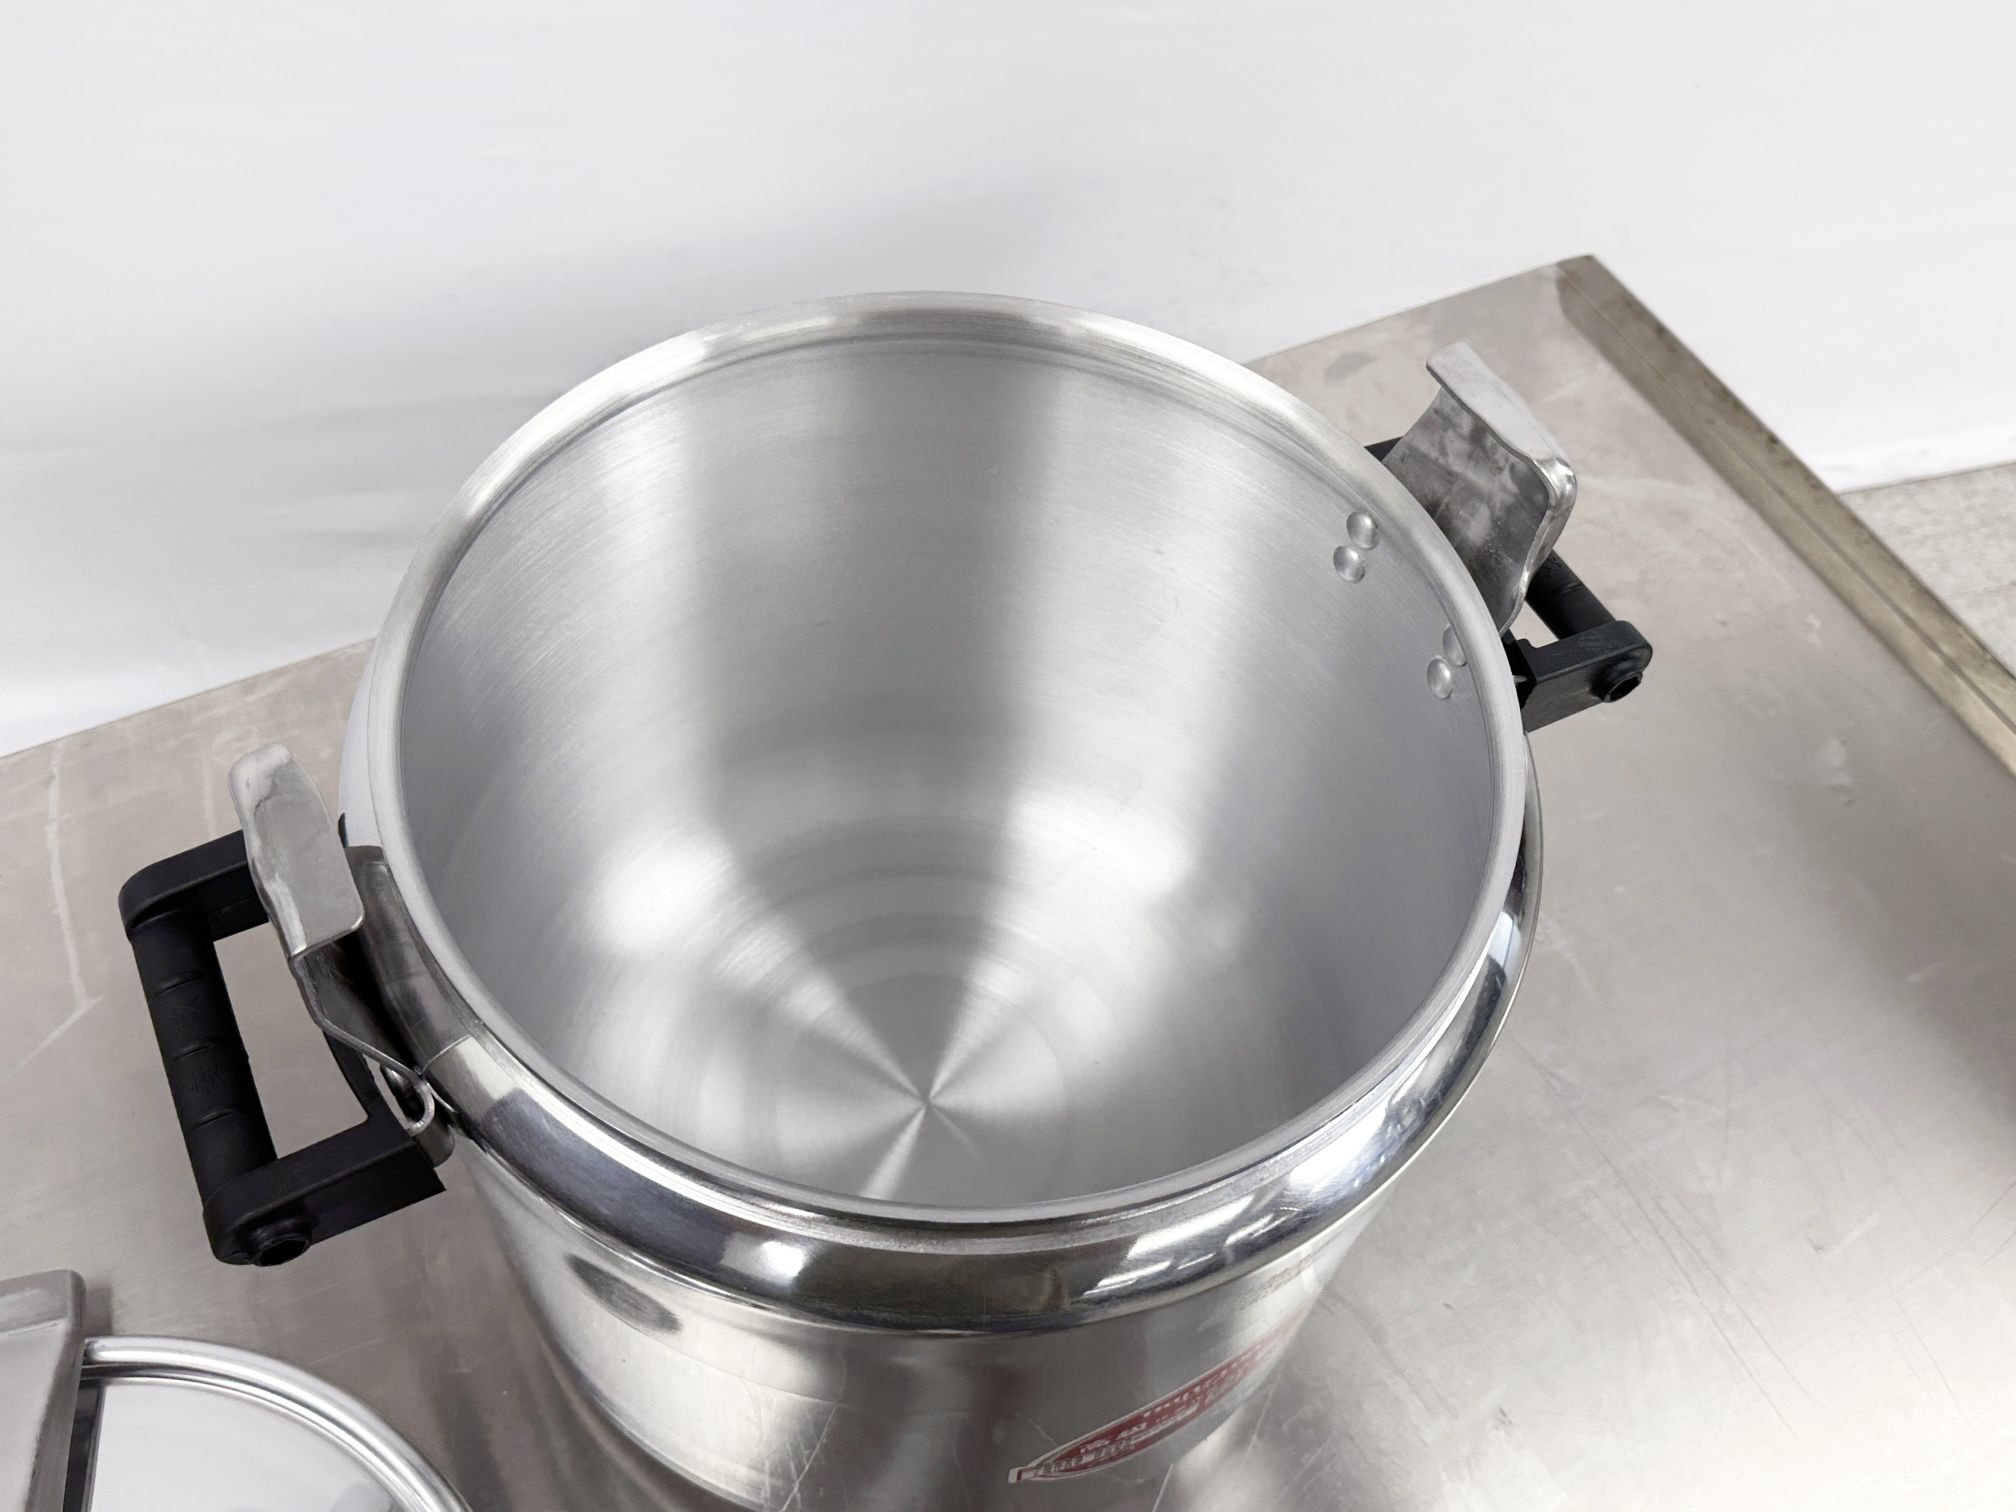 Cooler Depot 50 Qt Quick Pot Stainless Steel Commercial Pressure Cooker